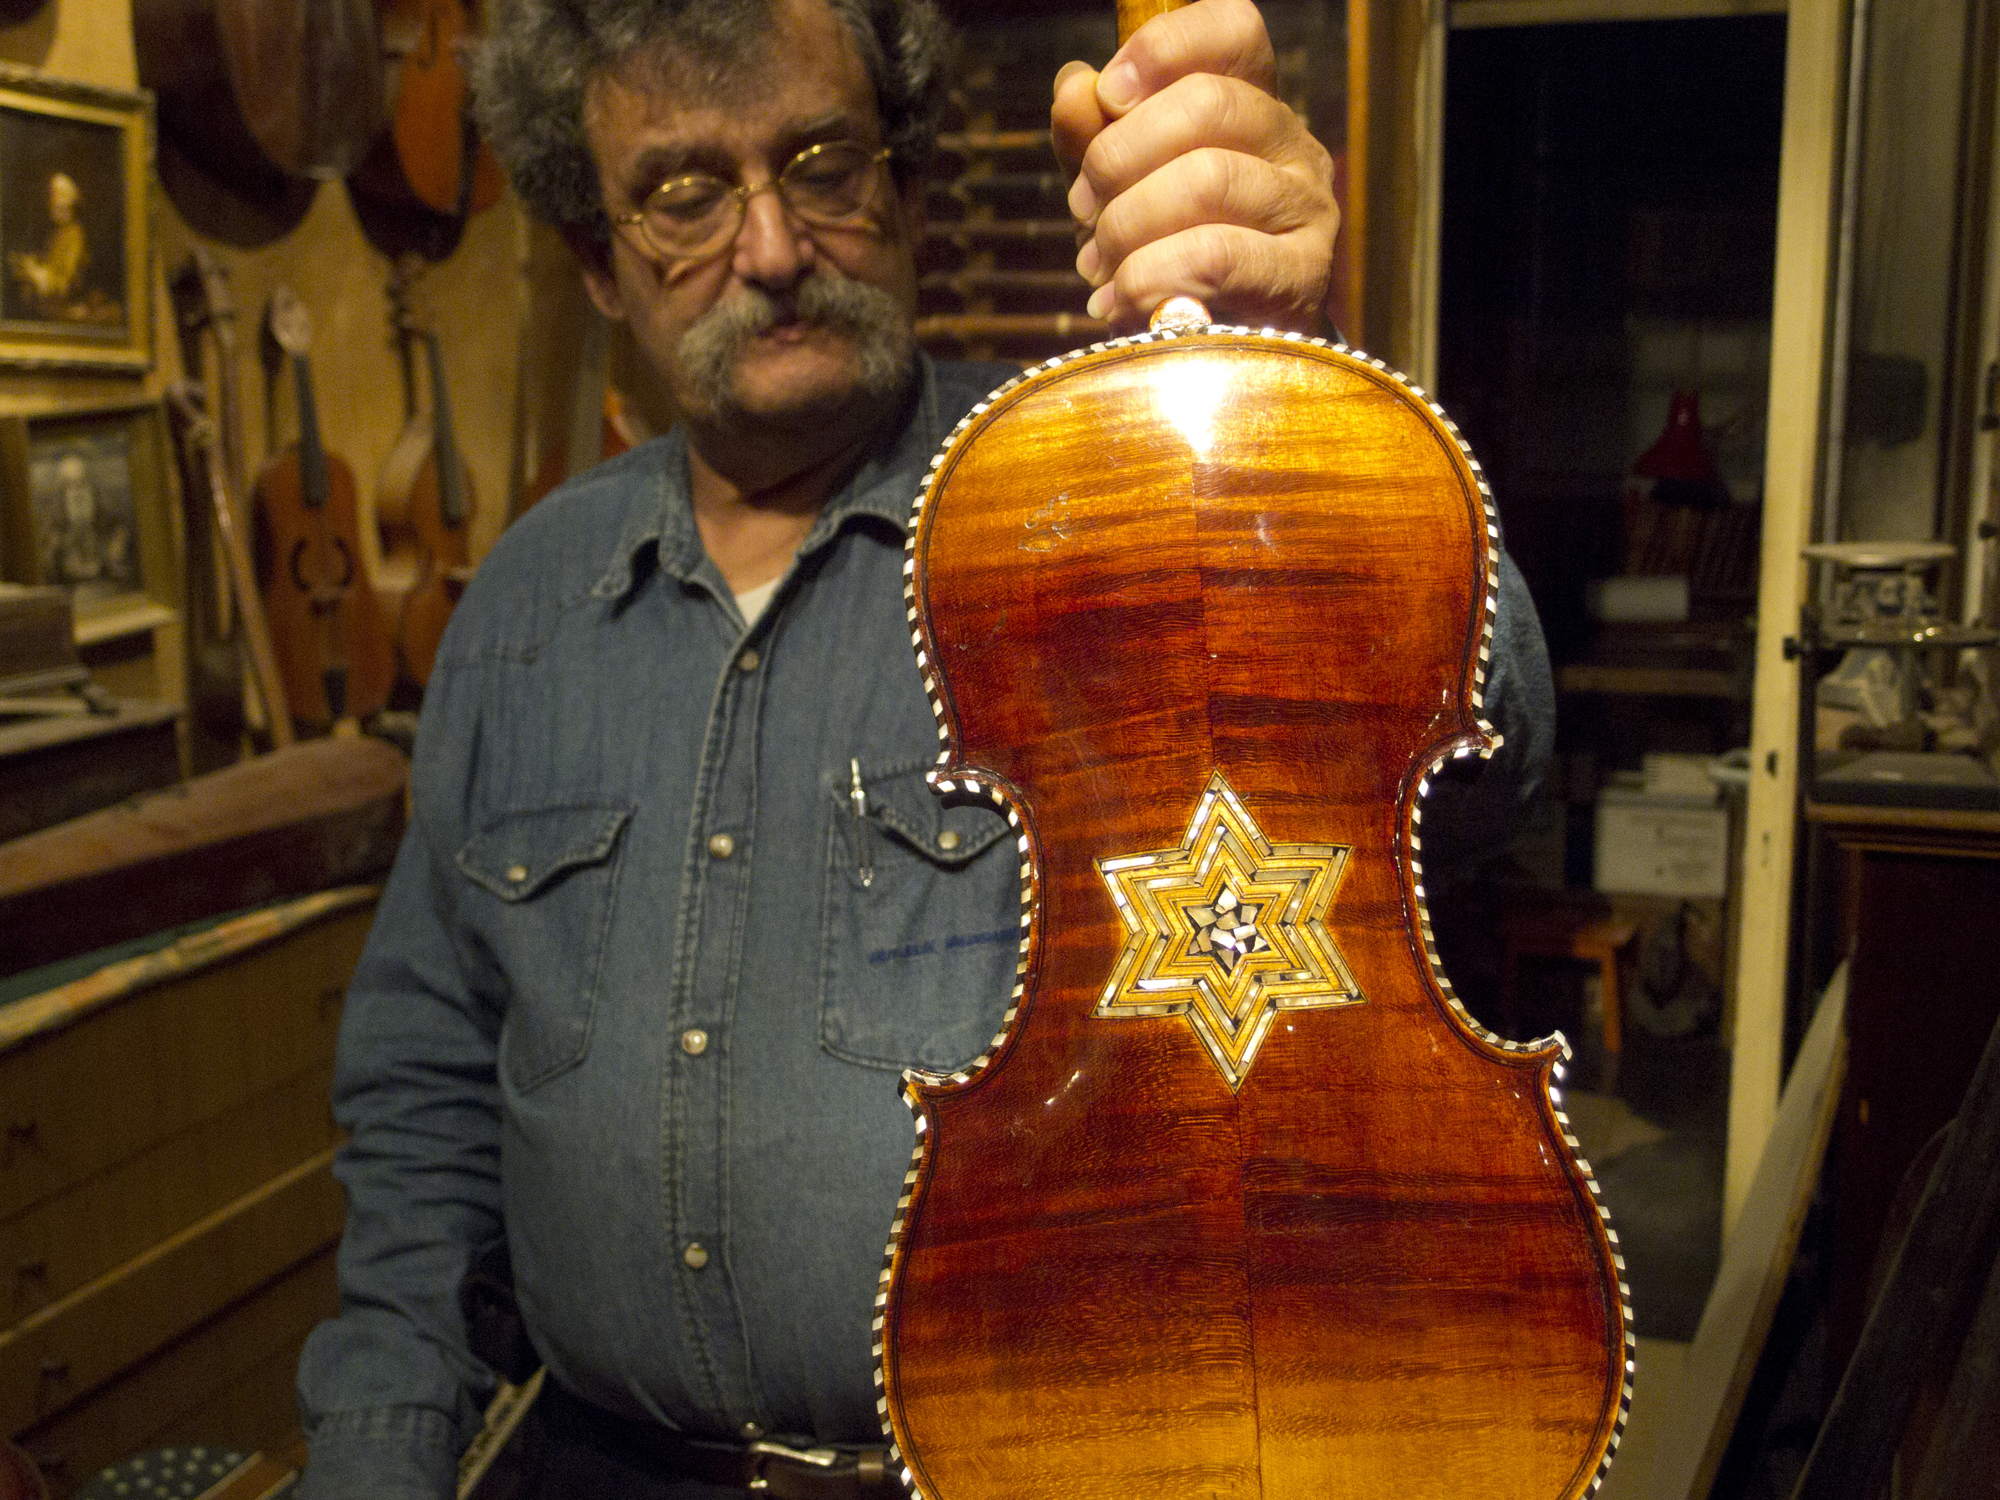 Amnon Weinstein restores violins with an emotional history. Photo by Debra Yasinow